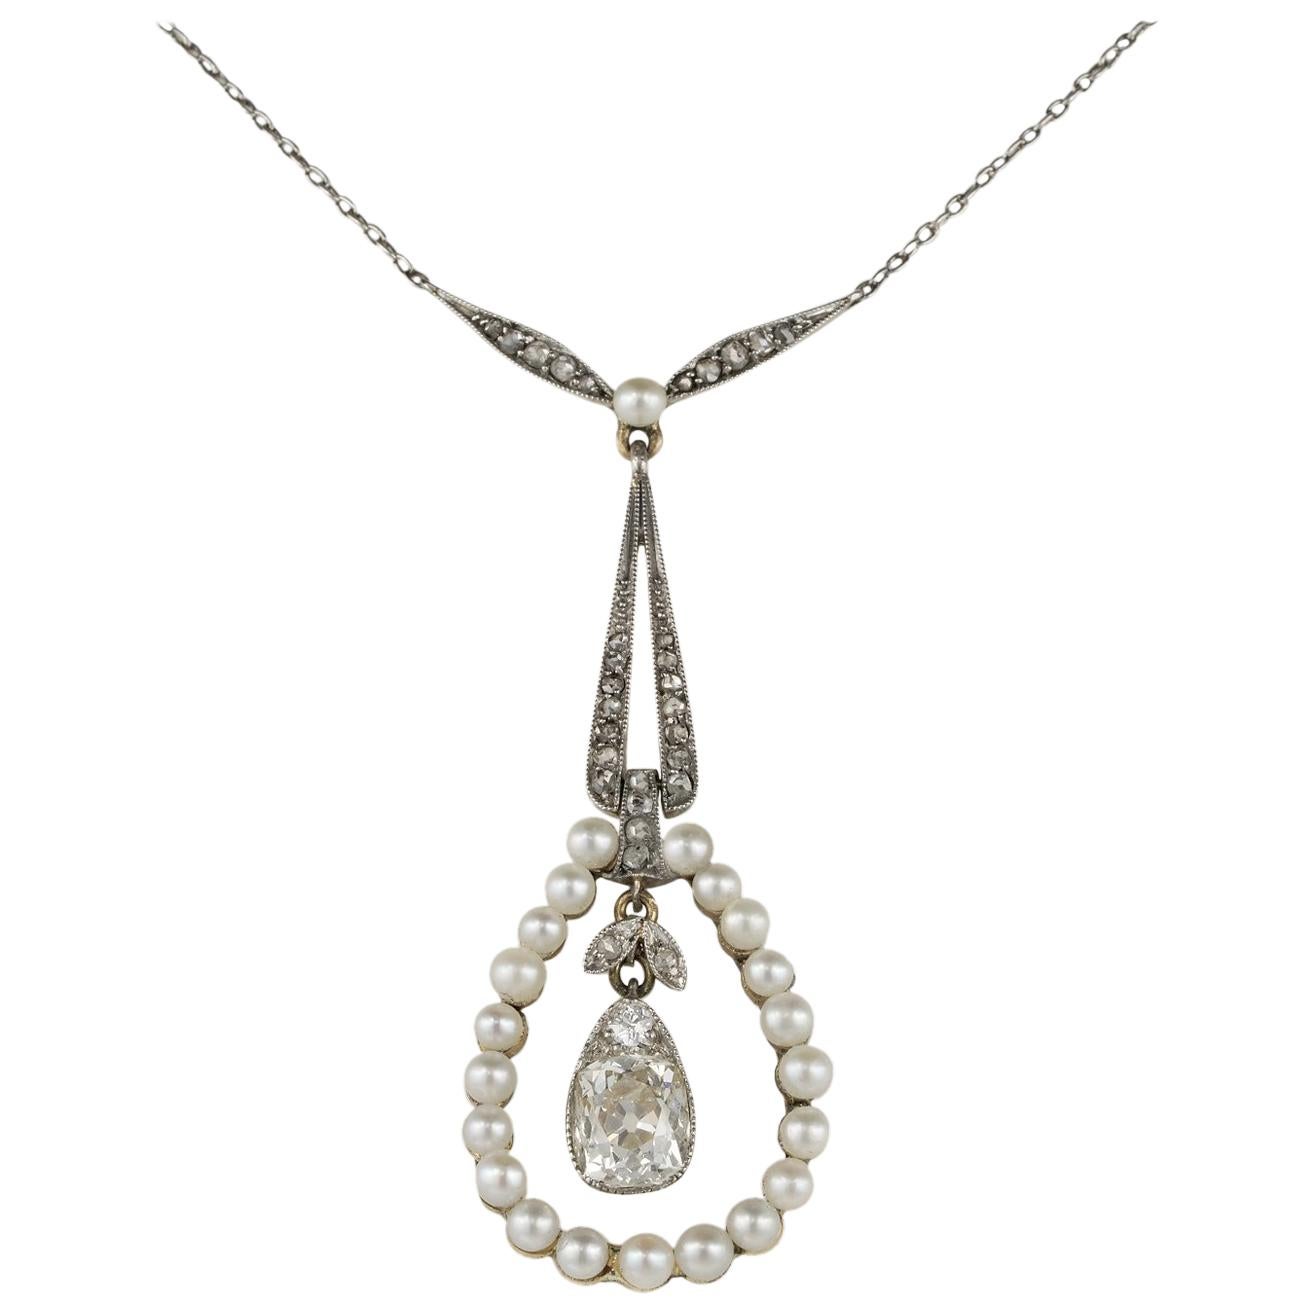 Exquisite 1.20 Carat Old Mine Diamond Plus Natural Pearl Pendant Necklace For Sale